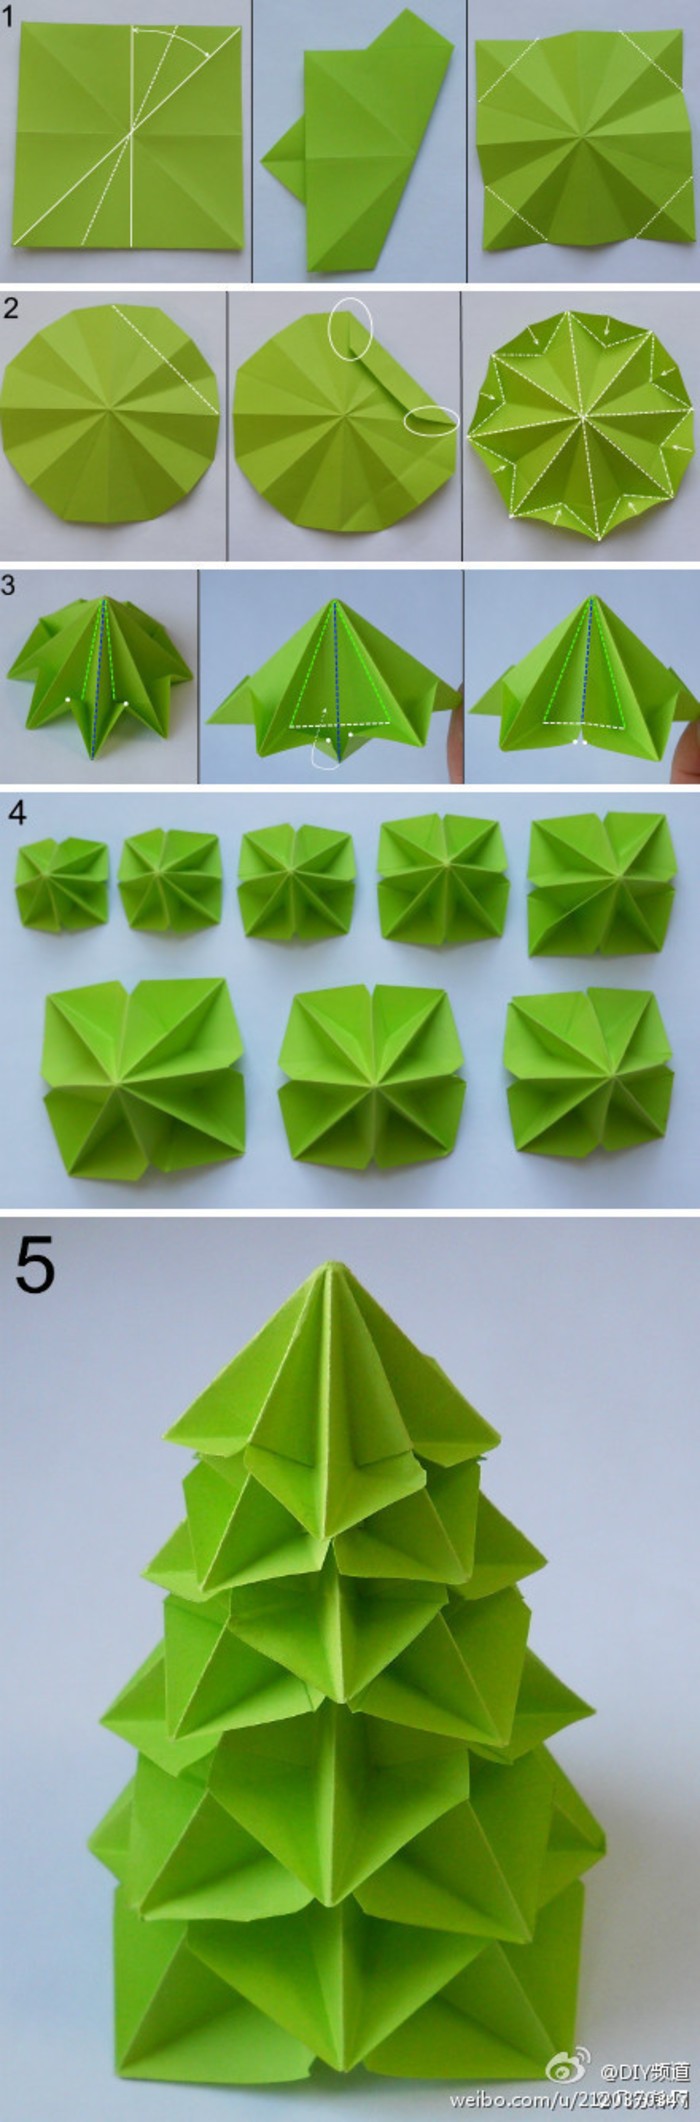 Papercraft Tree Origami Modular Christmas Tree Folding